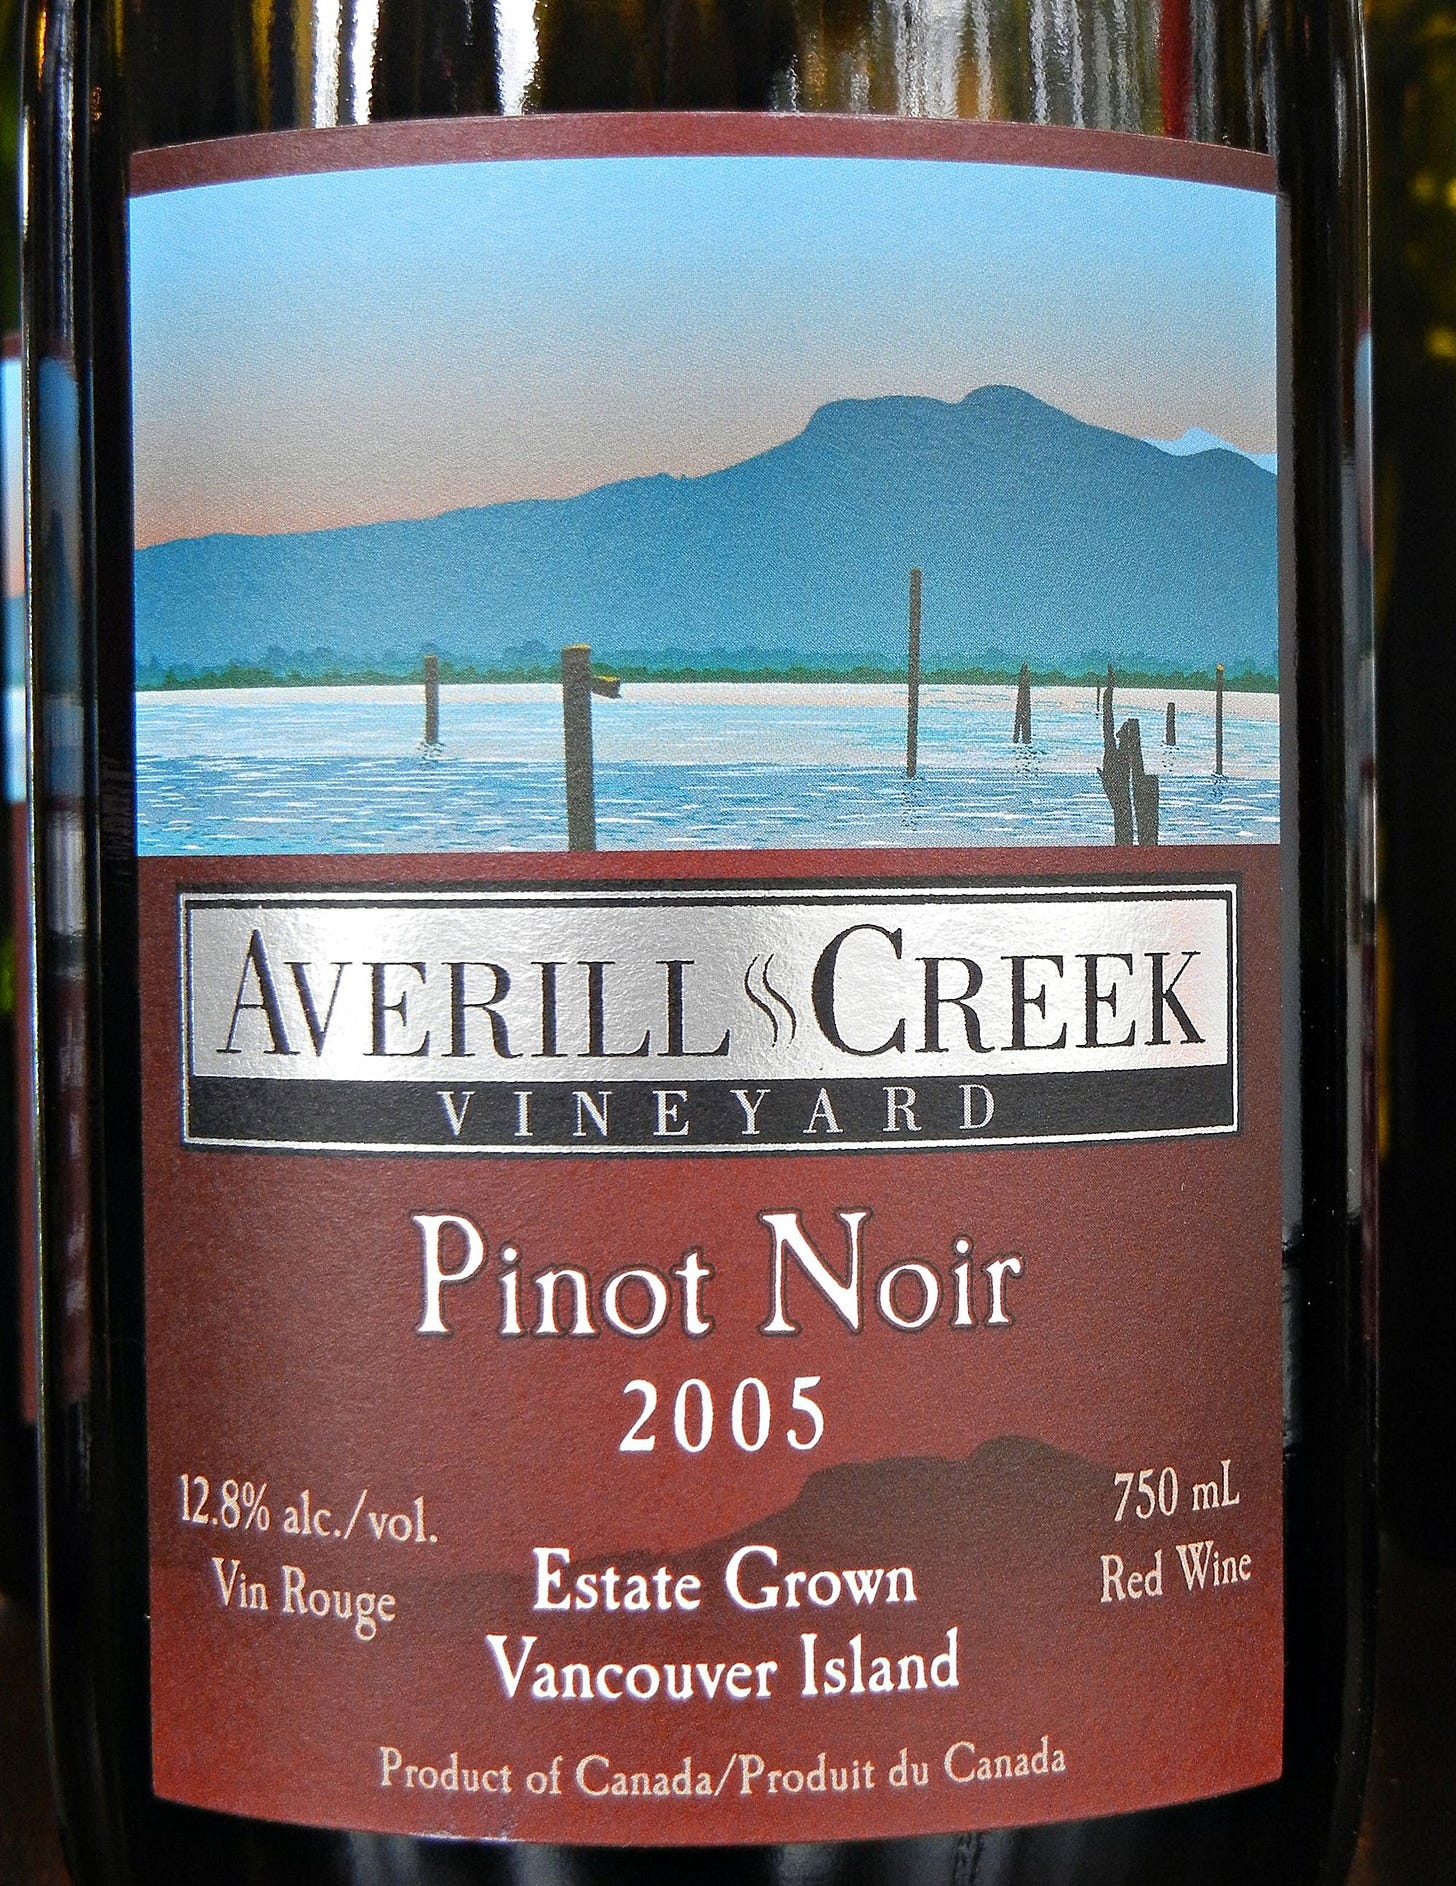 Averill Creek Pinot Noir 2005 Label - BC Pinot Noir Tasting Review 24 